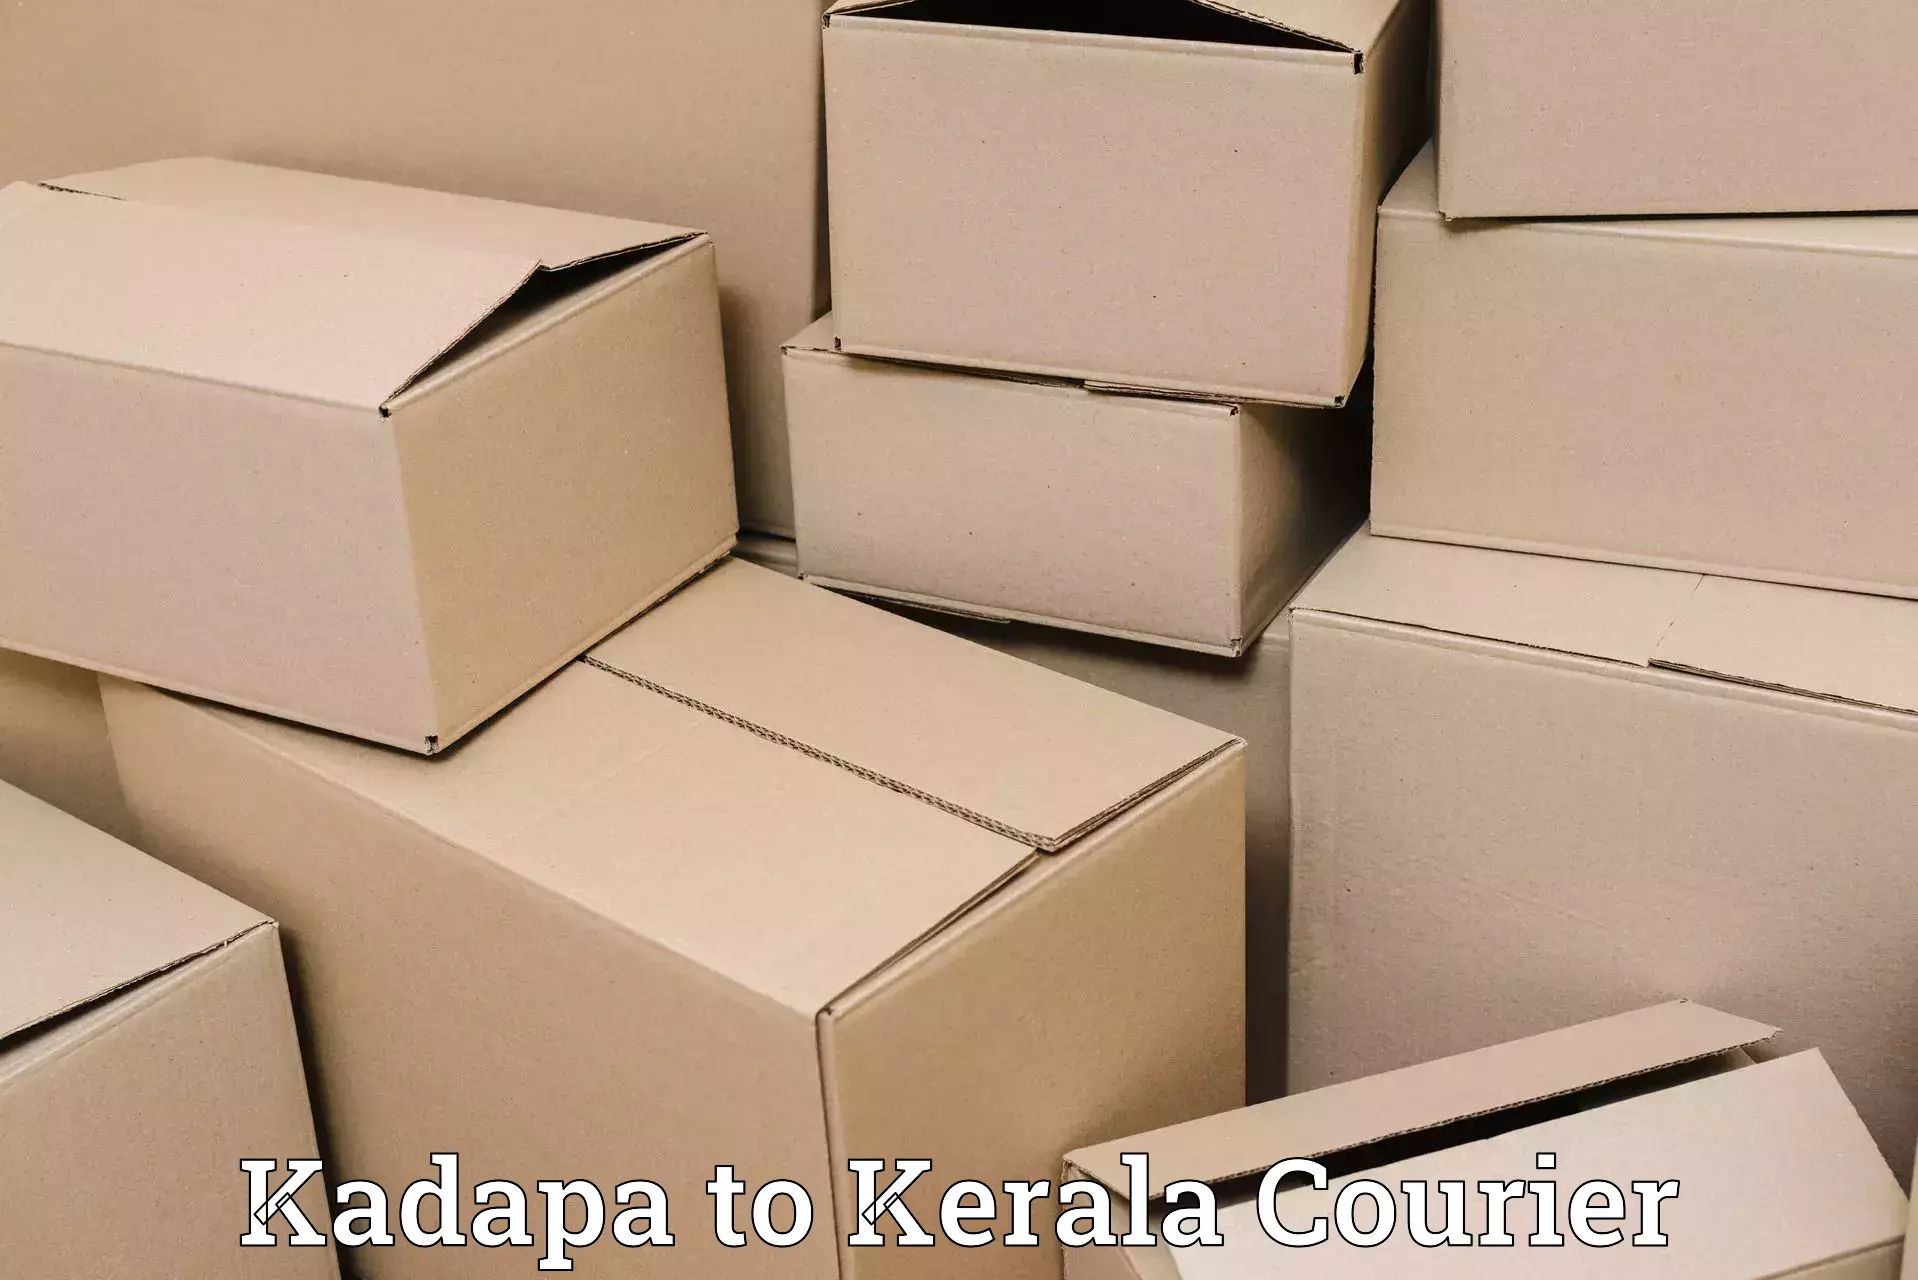 Logistics efficiency Kadapa to Kalpetta